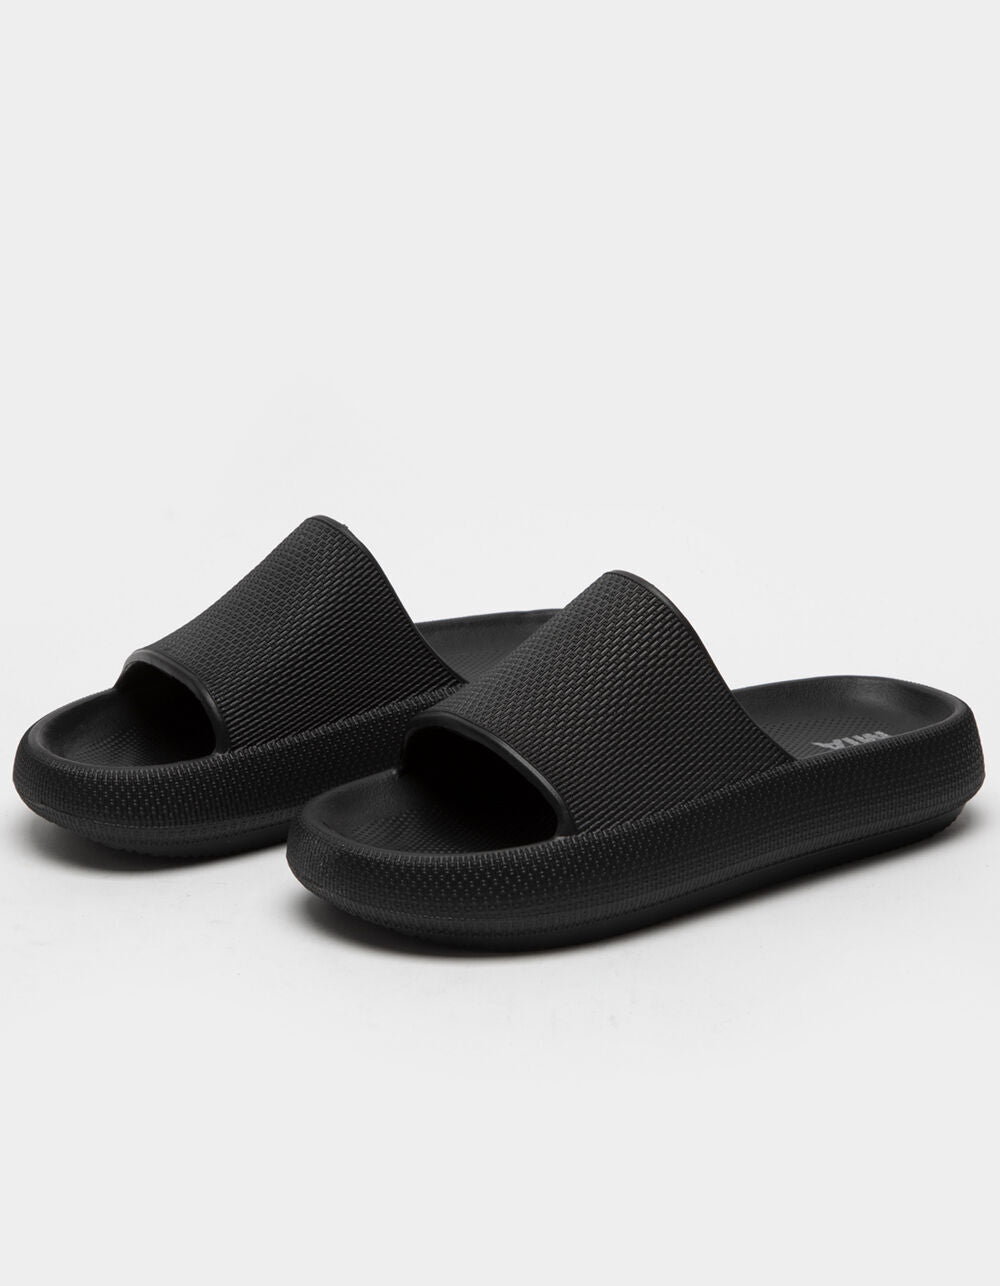 Buy Blue Flat Sandals for Women by Sole head Online | Ajio.com